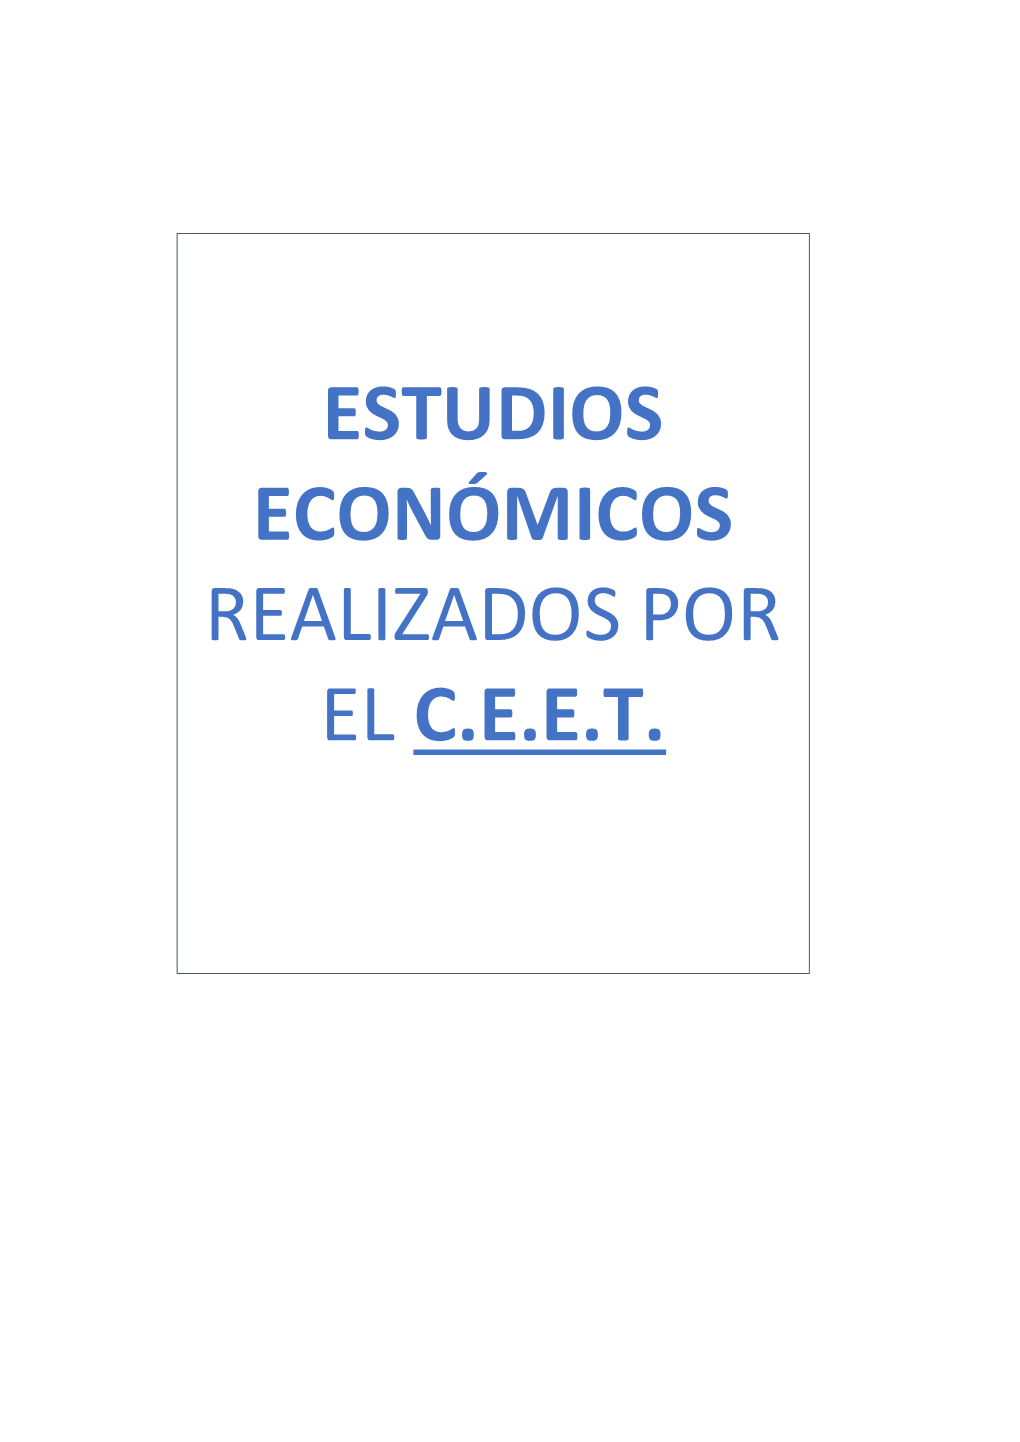 Estudios Económicos Realizados Por El C.E.E.T